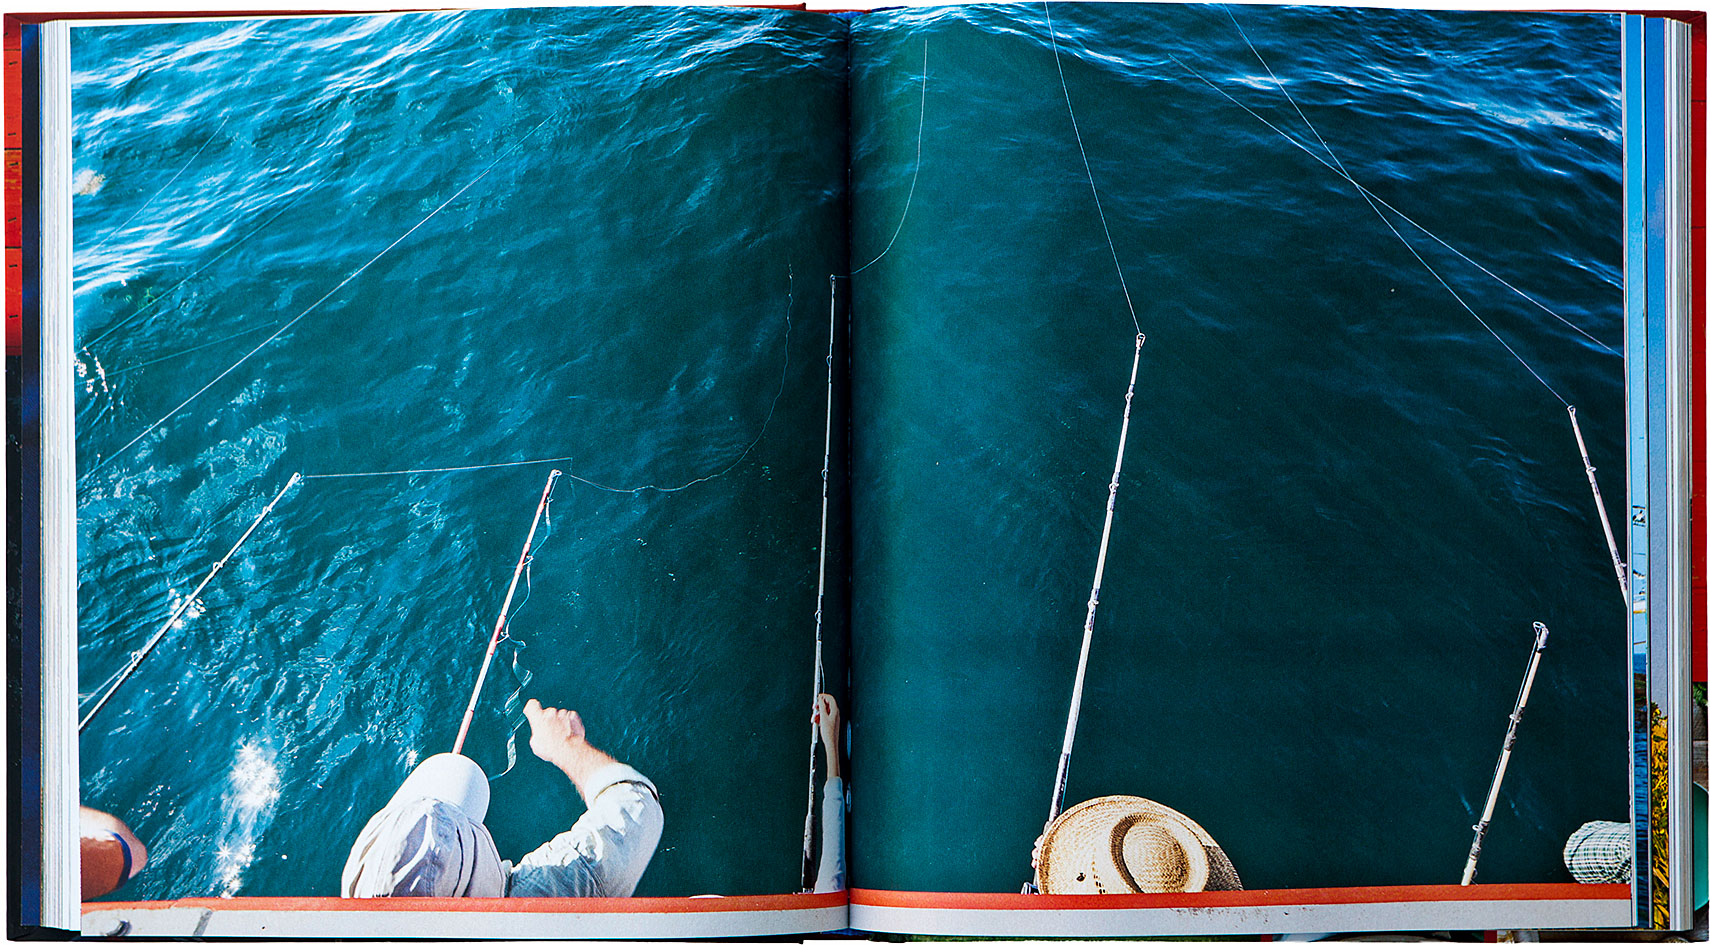 Deep sea fishermen on fishing boat